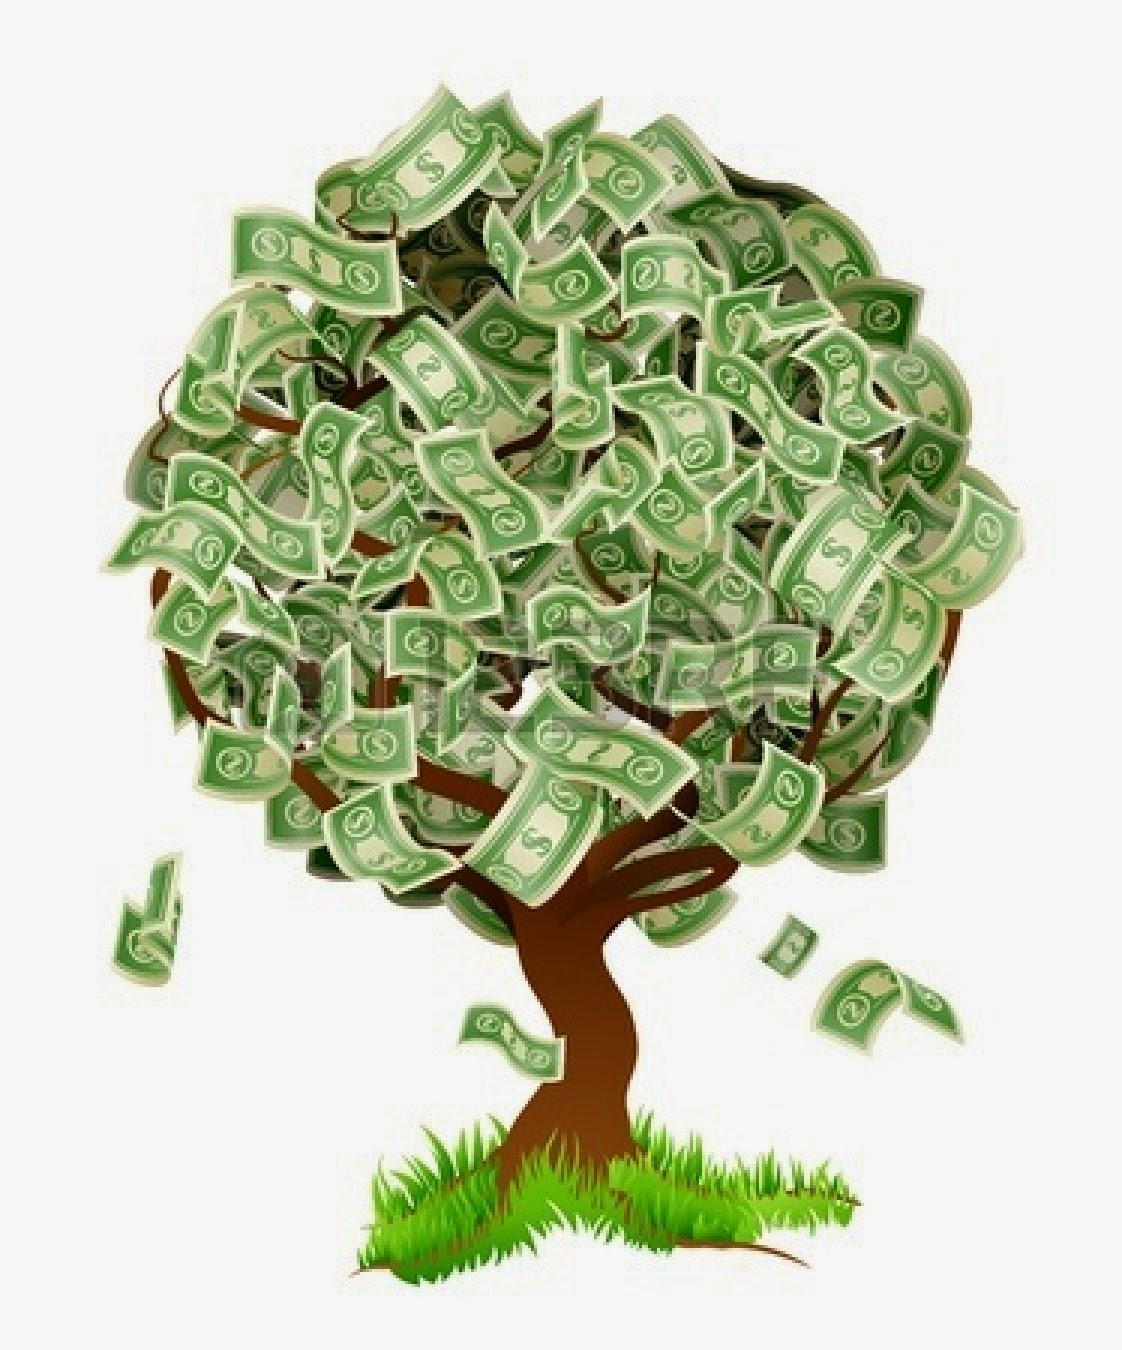 Magic+Money+Tree.jpg (1122×1350)